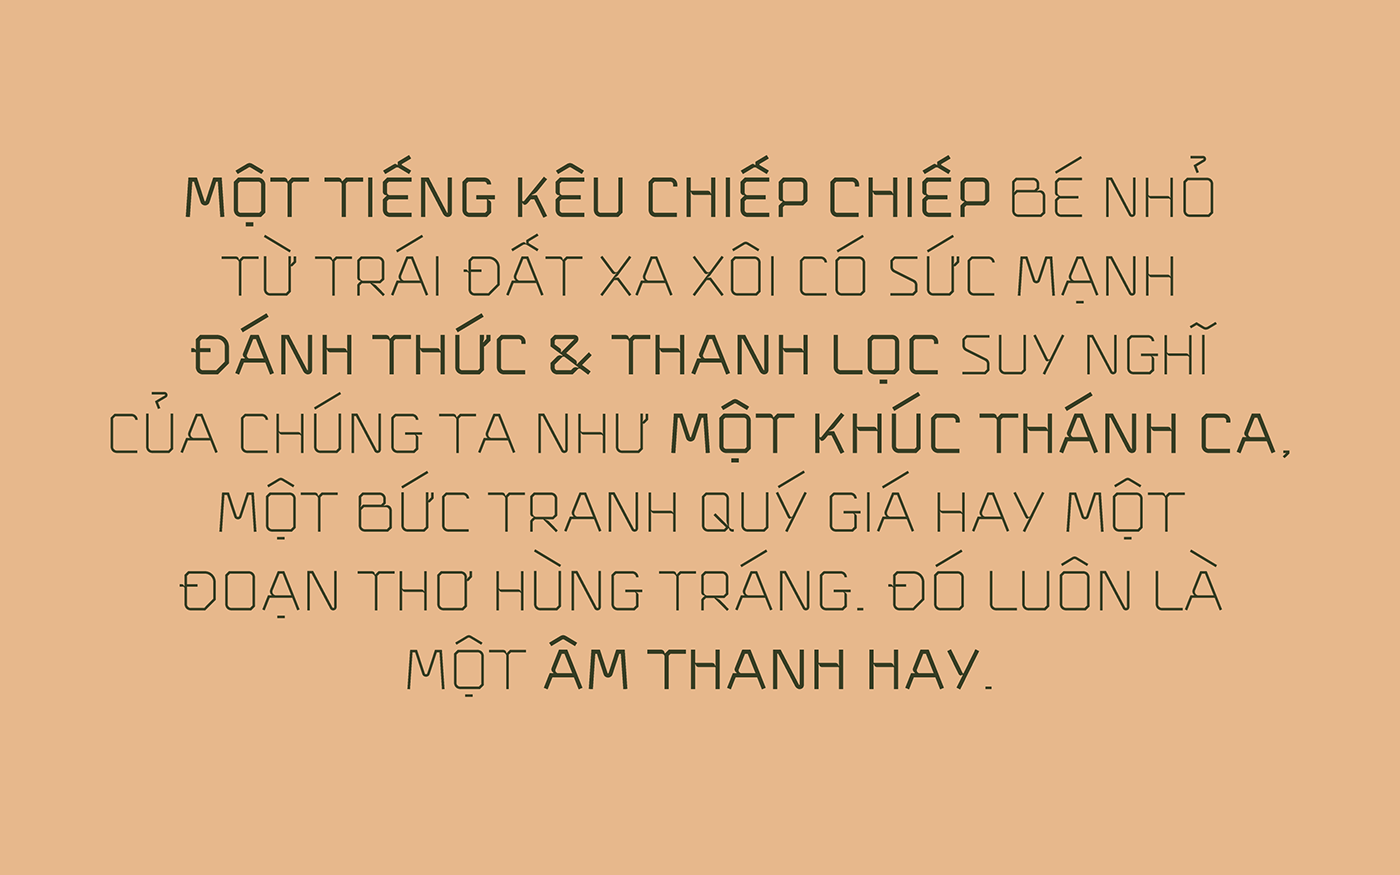 ben datdo Display font geometric sans serif traditional vietnam Window